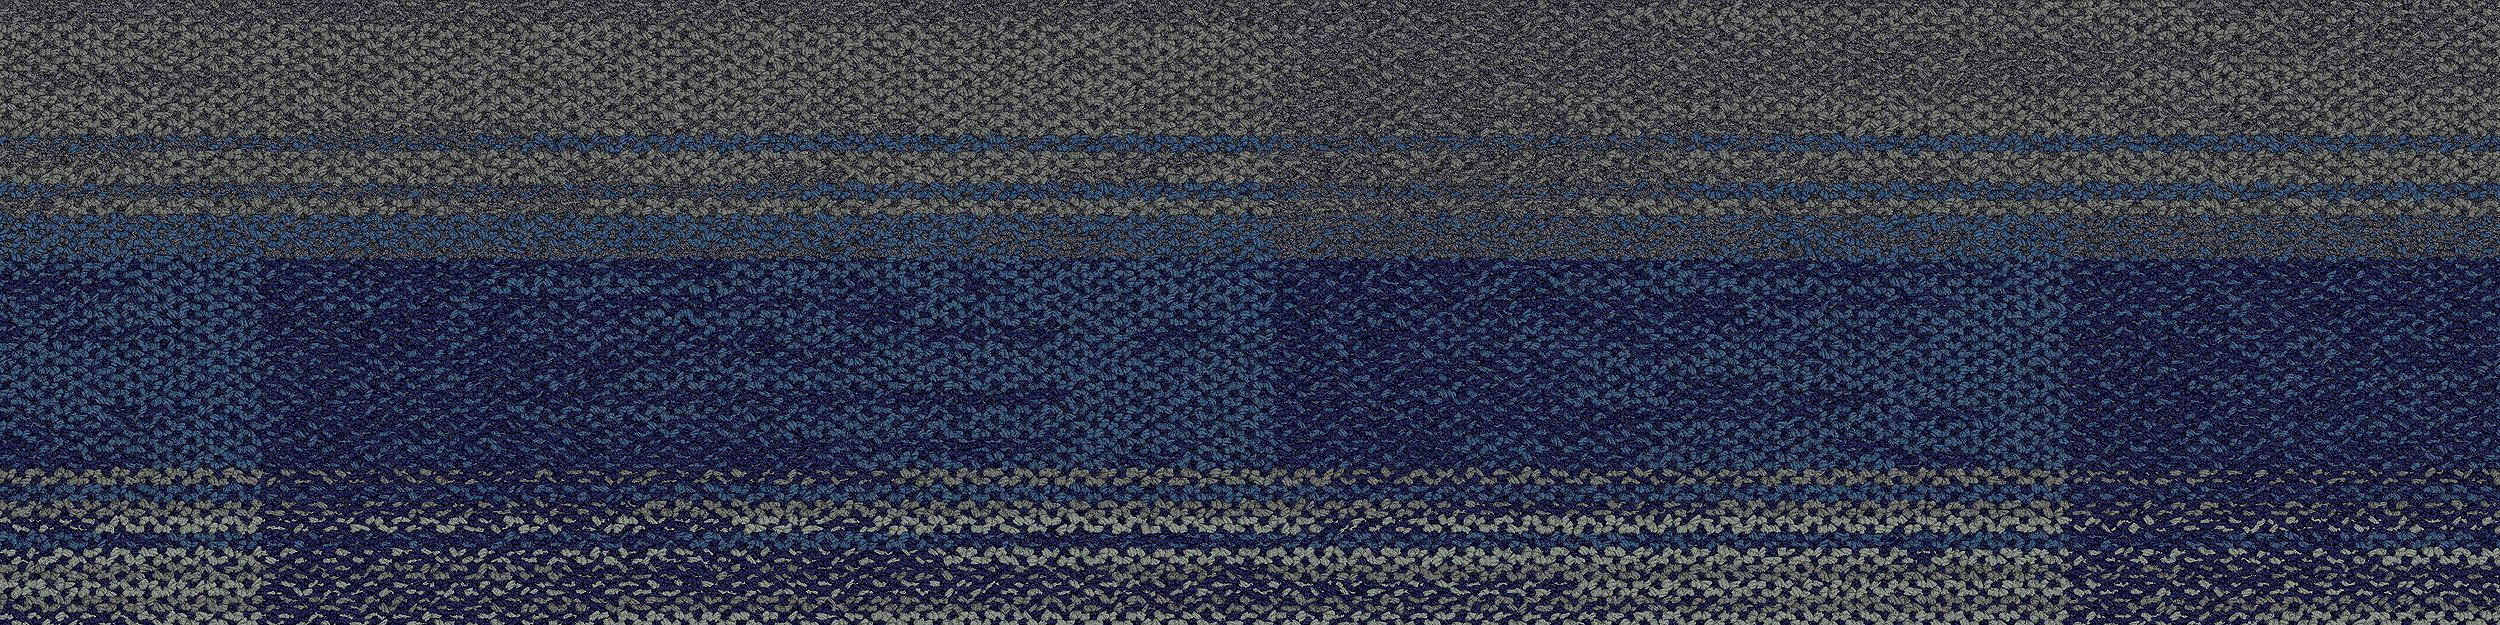 AE315 Carpet Tile In Granite/Azure imagen número 9